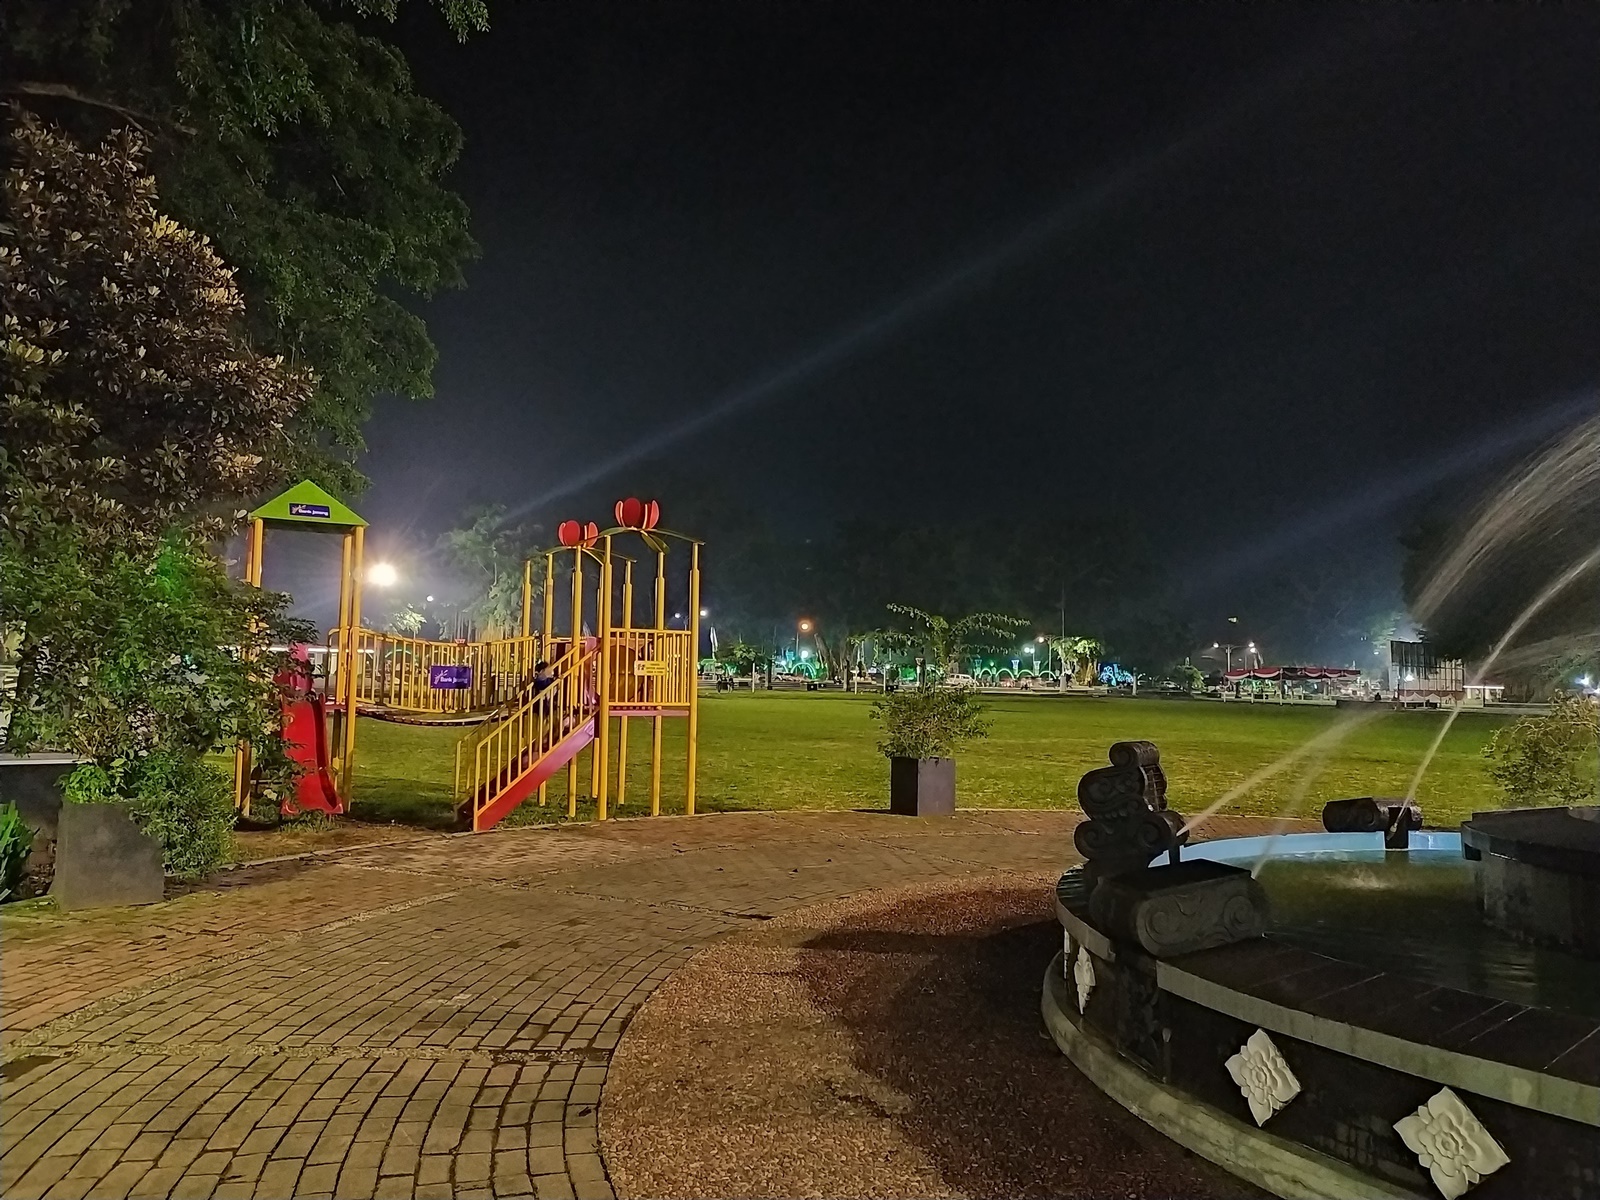 Playground di malam hari di area alun-alun wonosobo